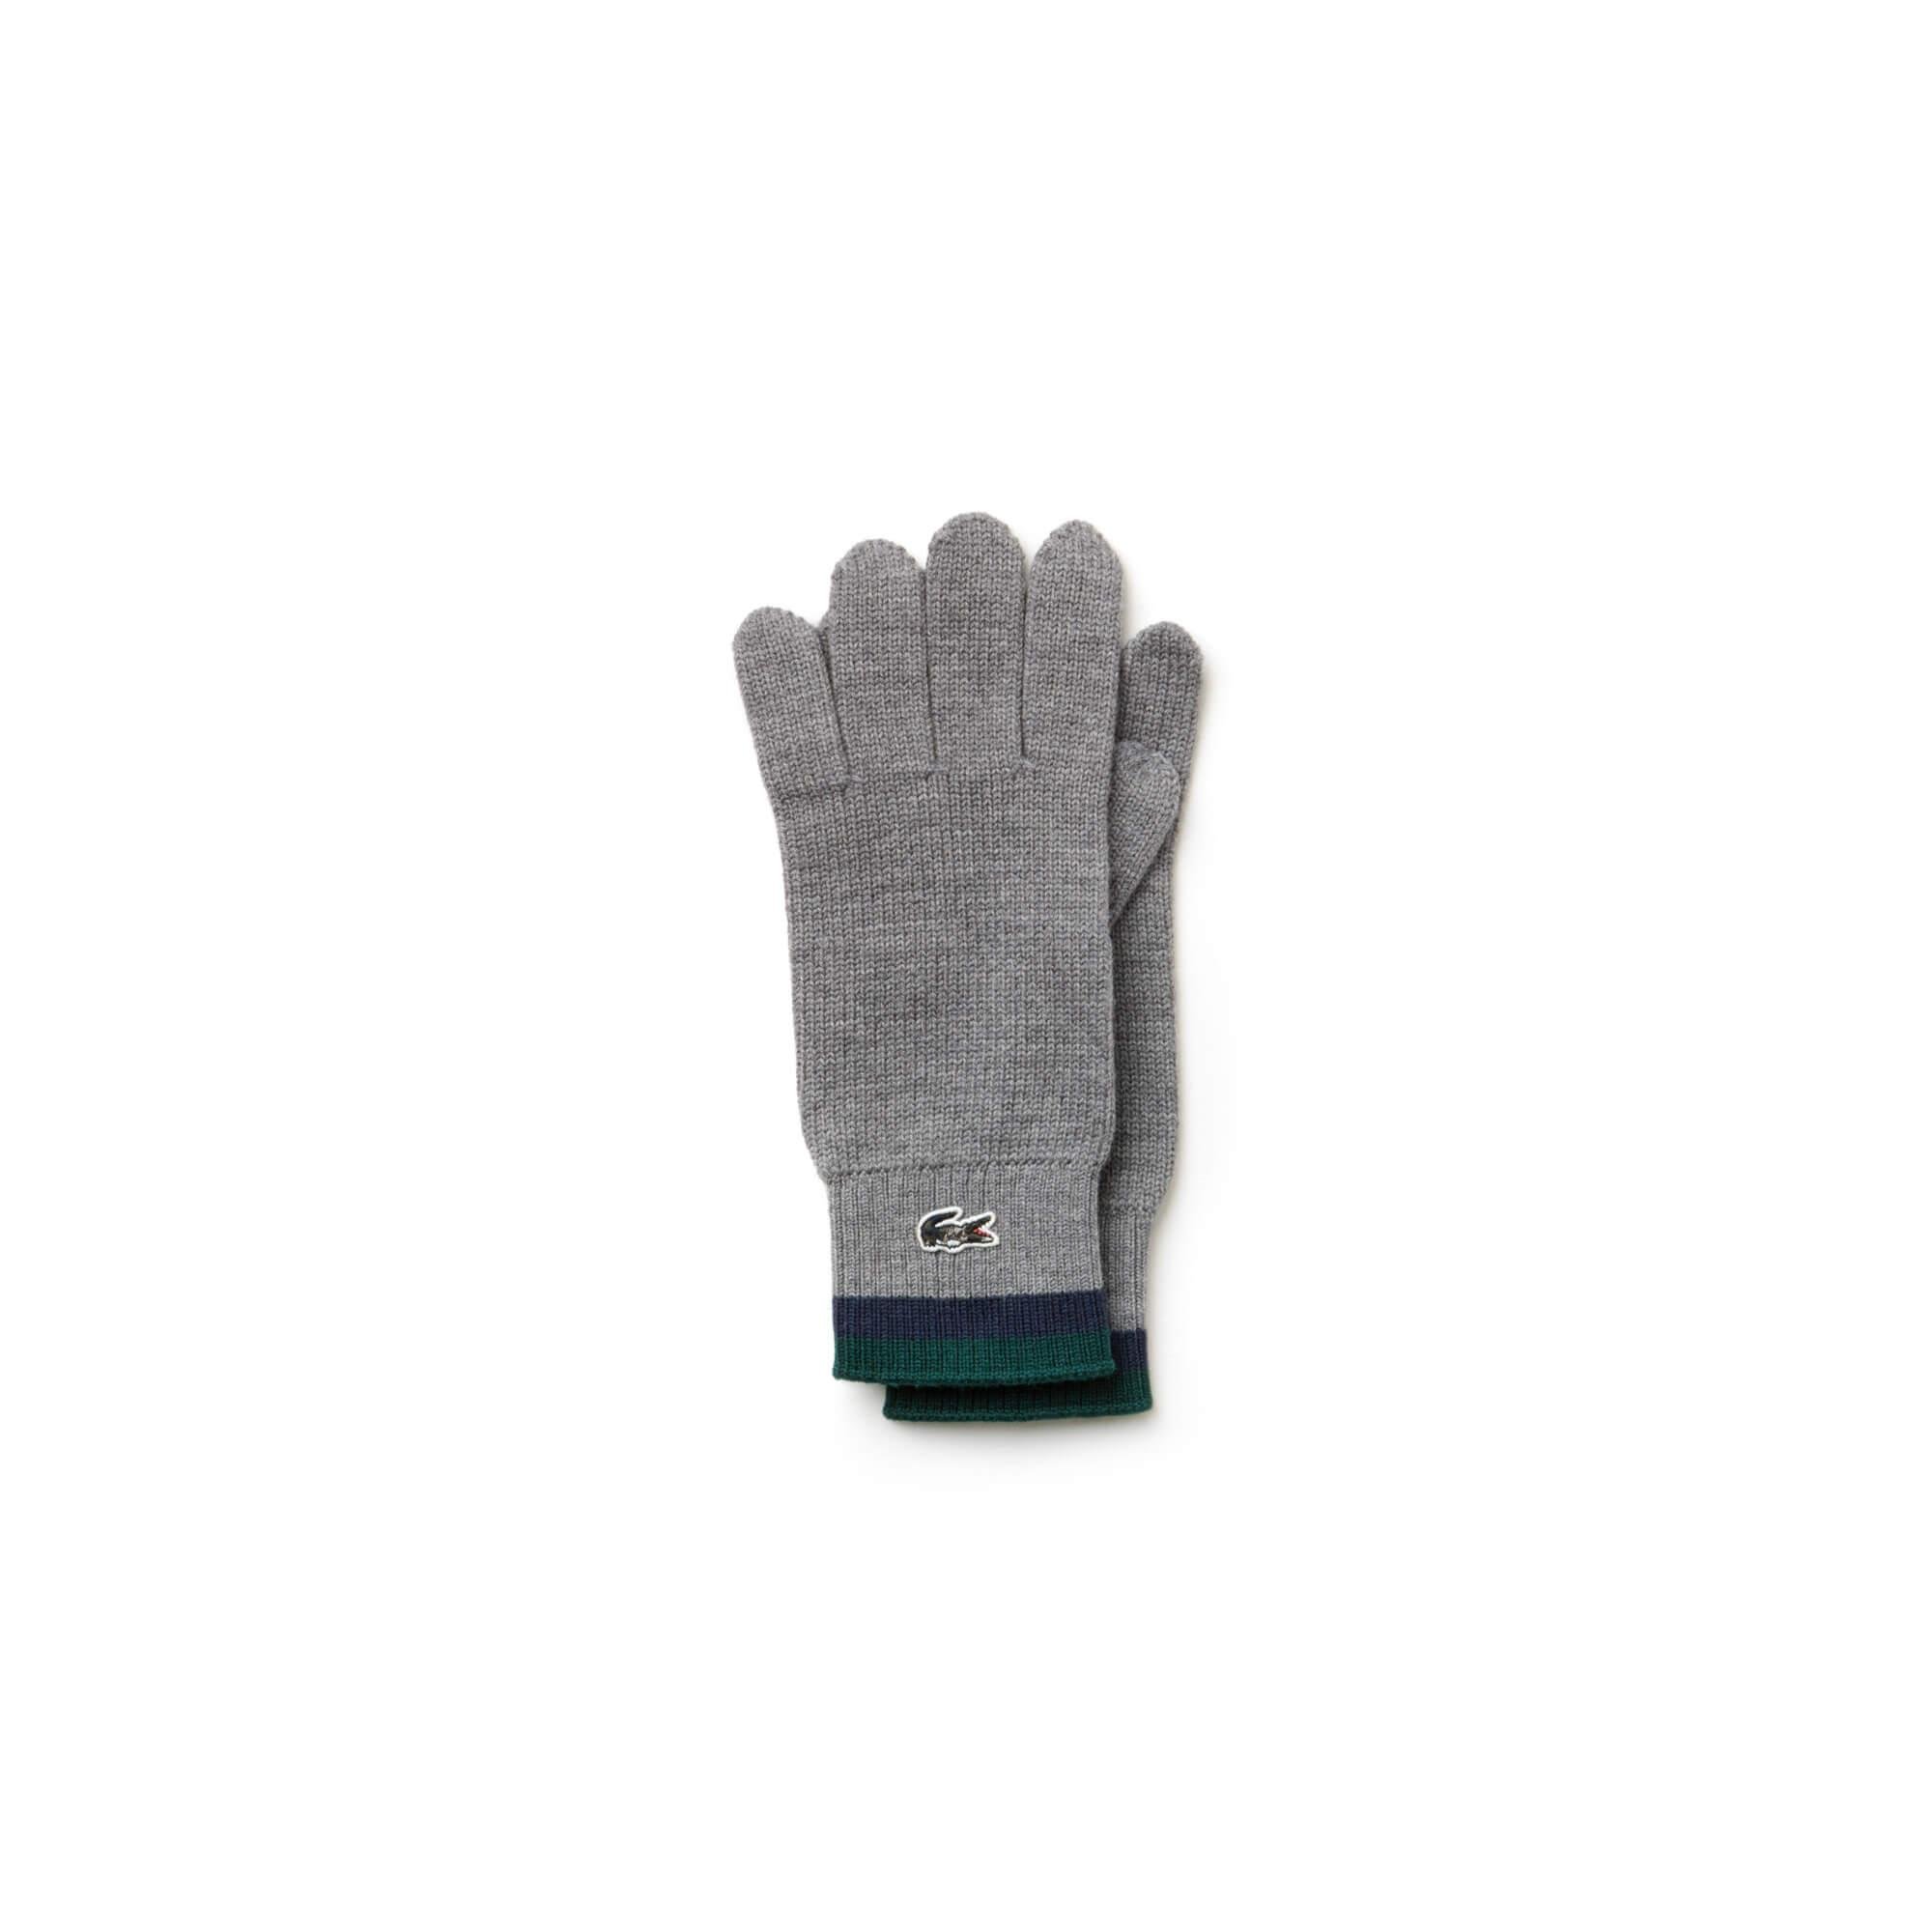 Lacoste Men's Gloves